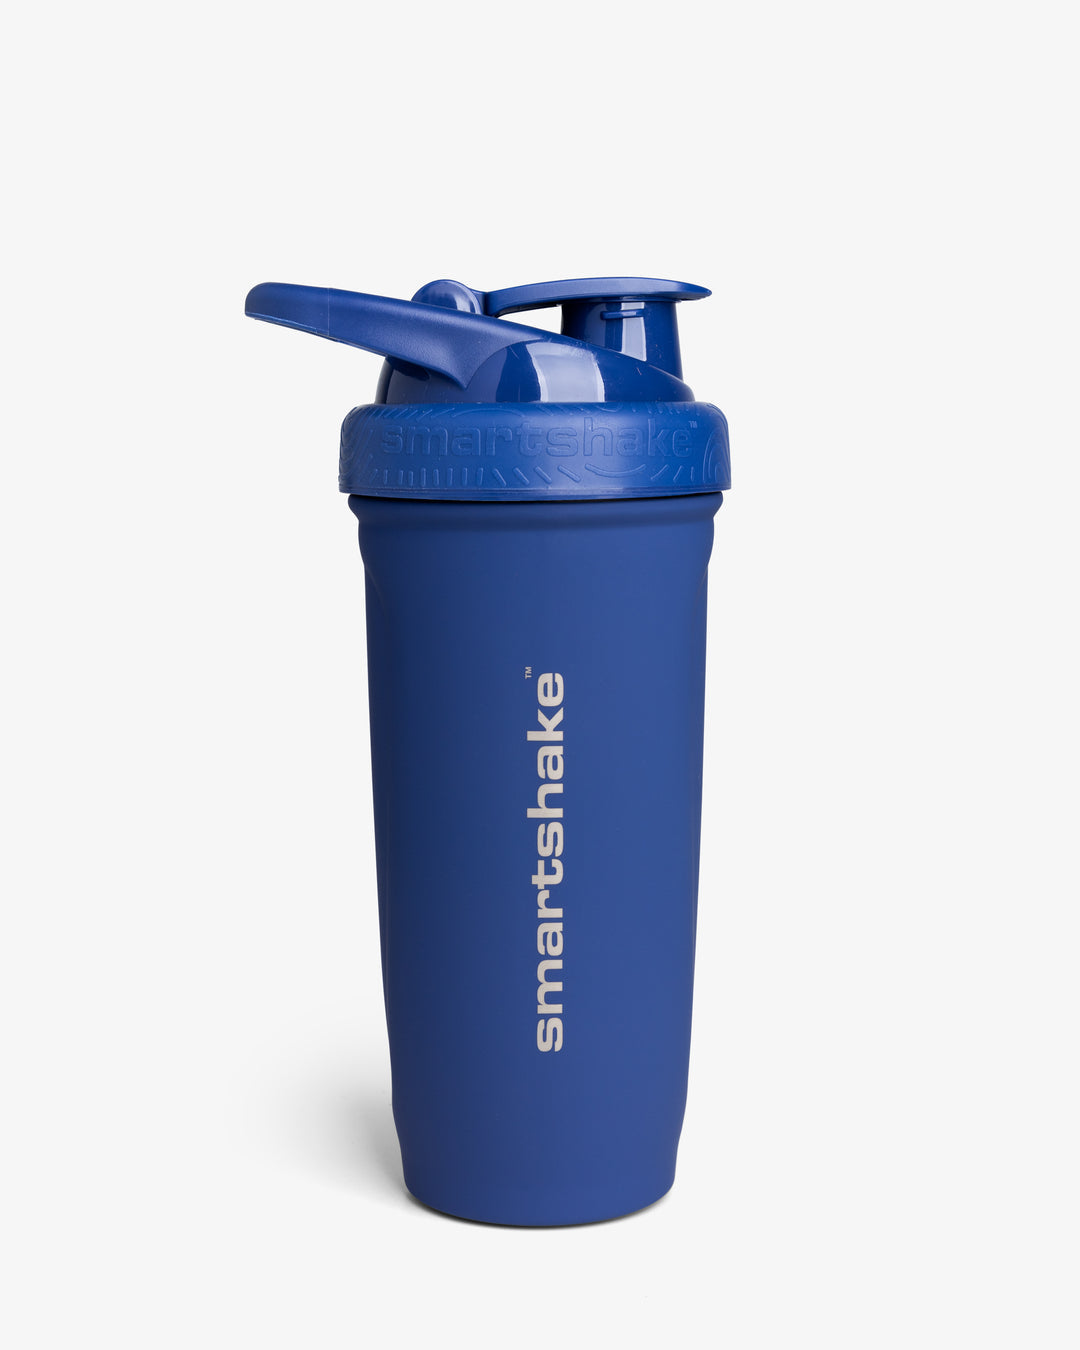 Smartshake Reforce Stainless Steel Shaker - Super Nutrition